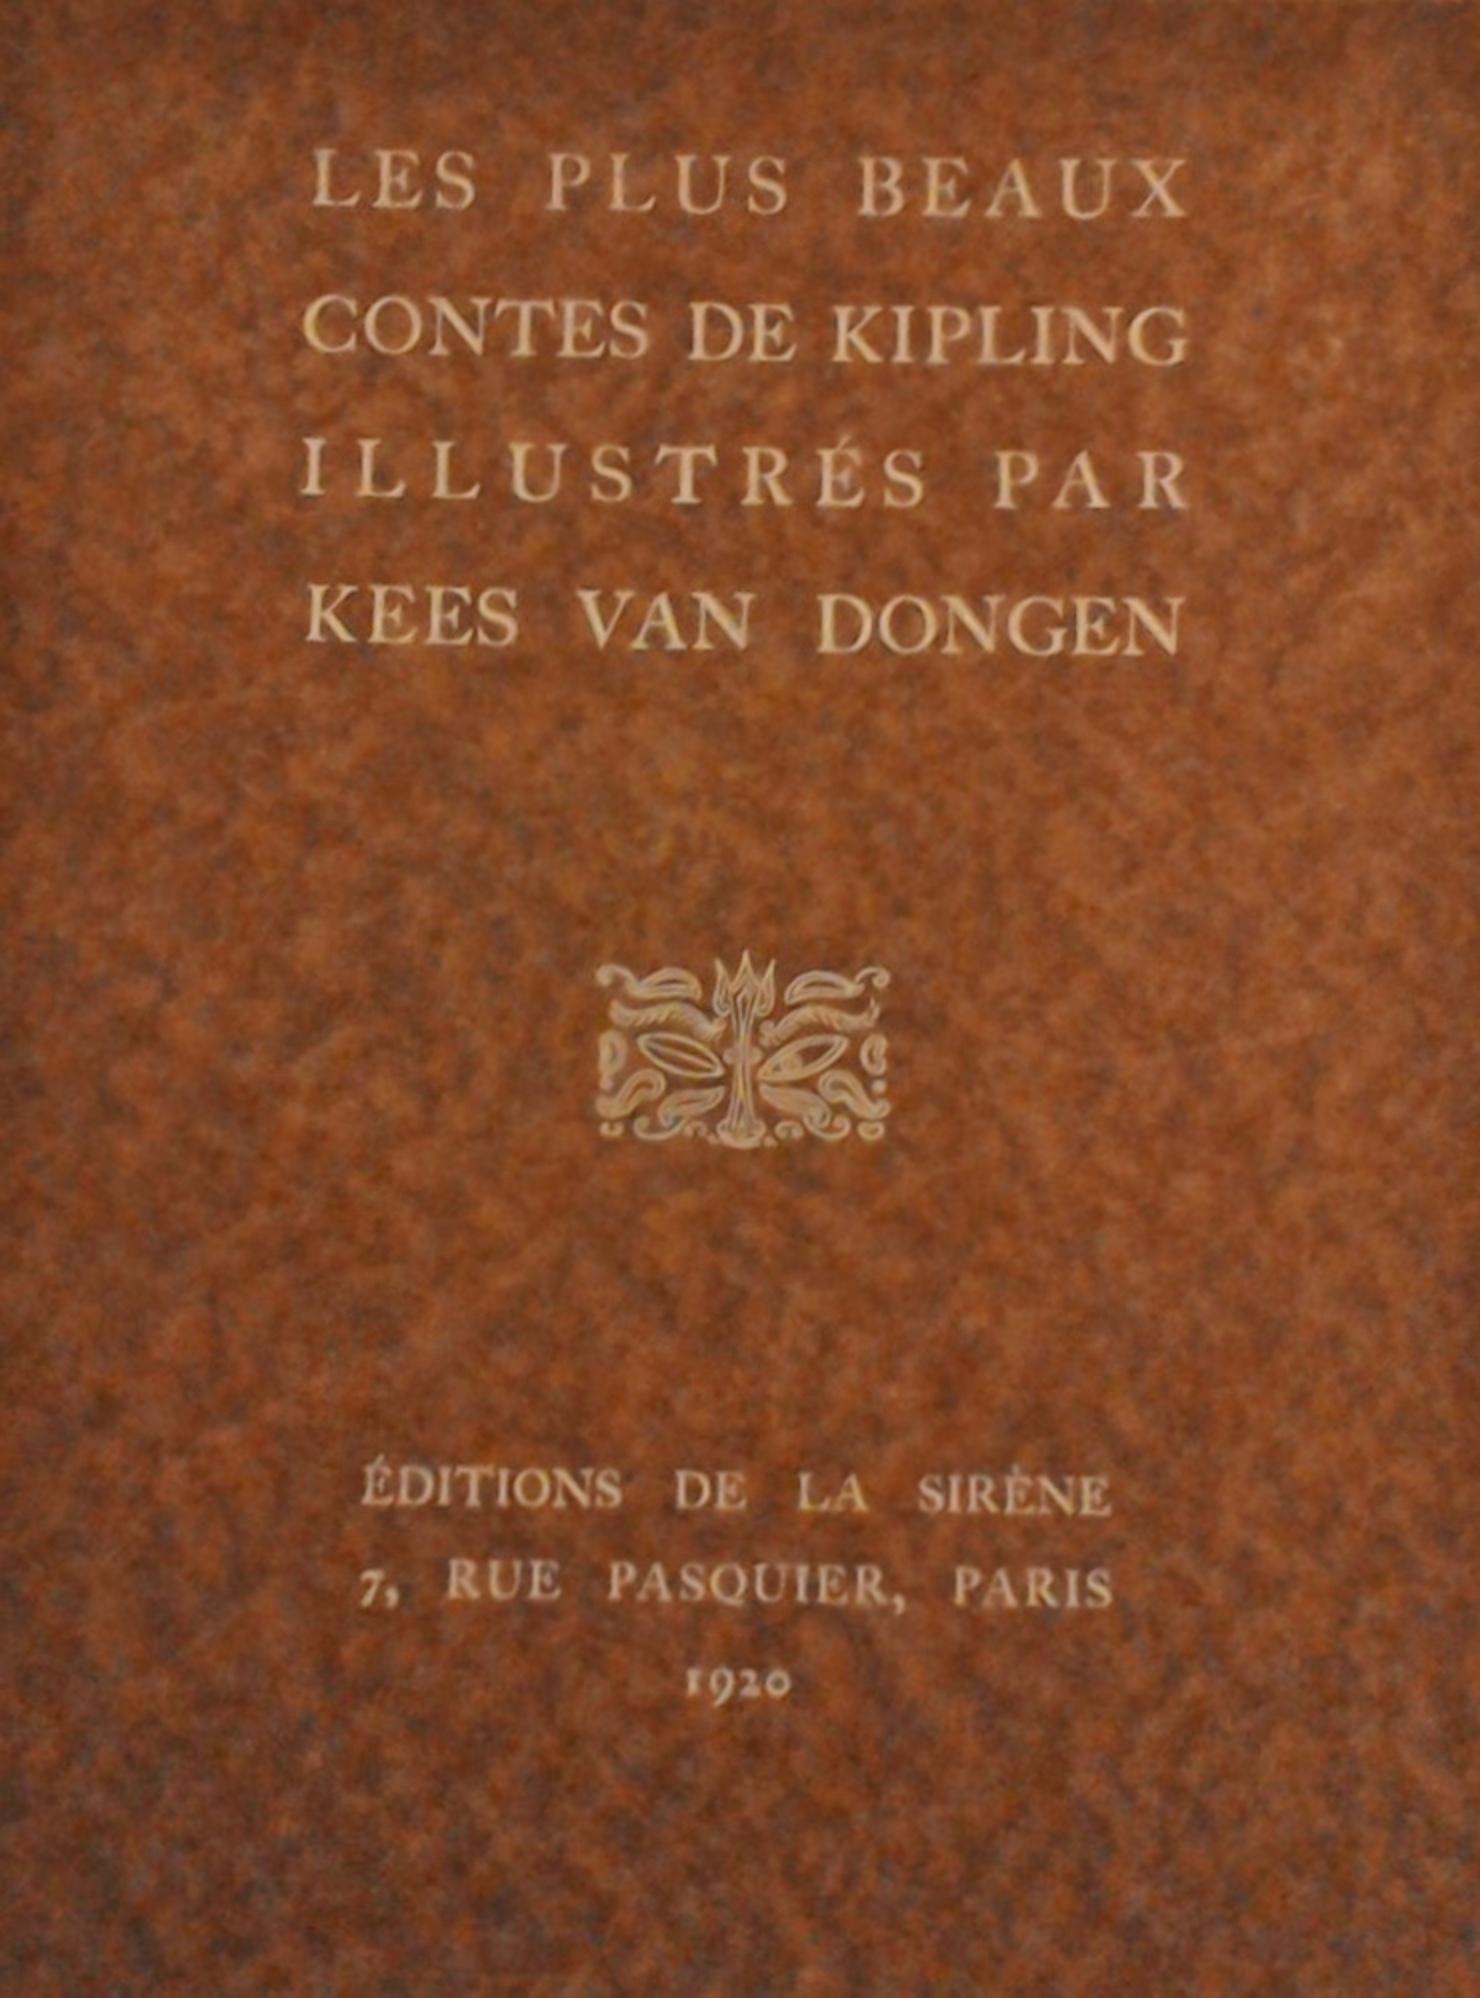 Les Plus Beaux Contes de Kipling -Rare Illustrated Book by K. Van Dongen - 1920 - Modern Art by Kees van Dongen